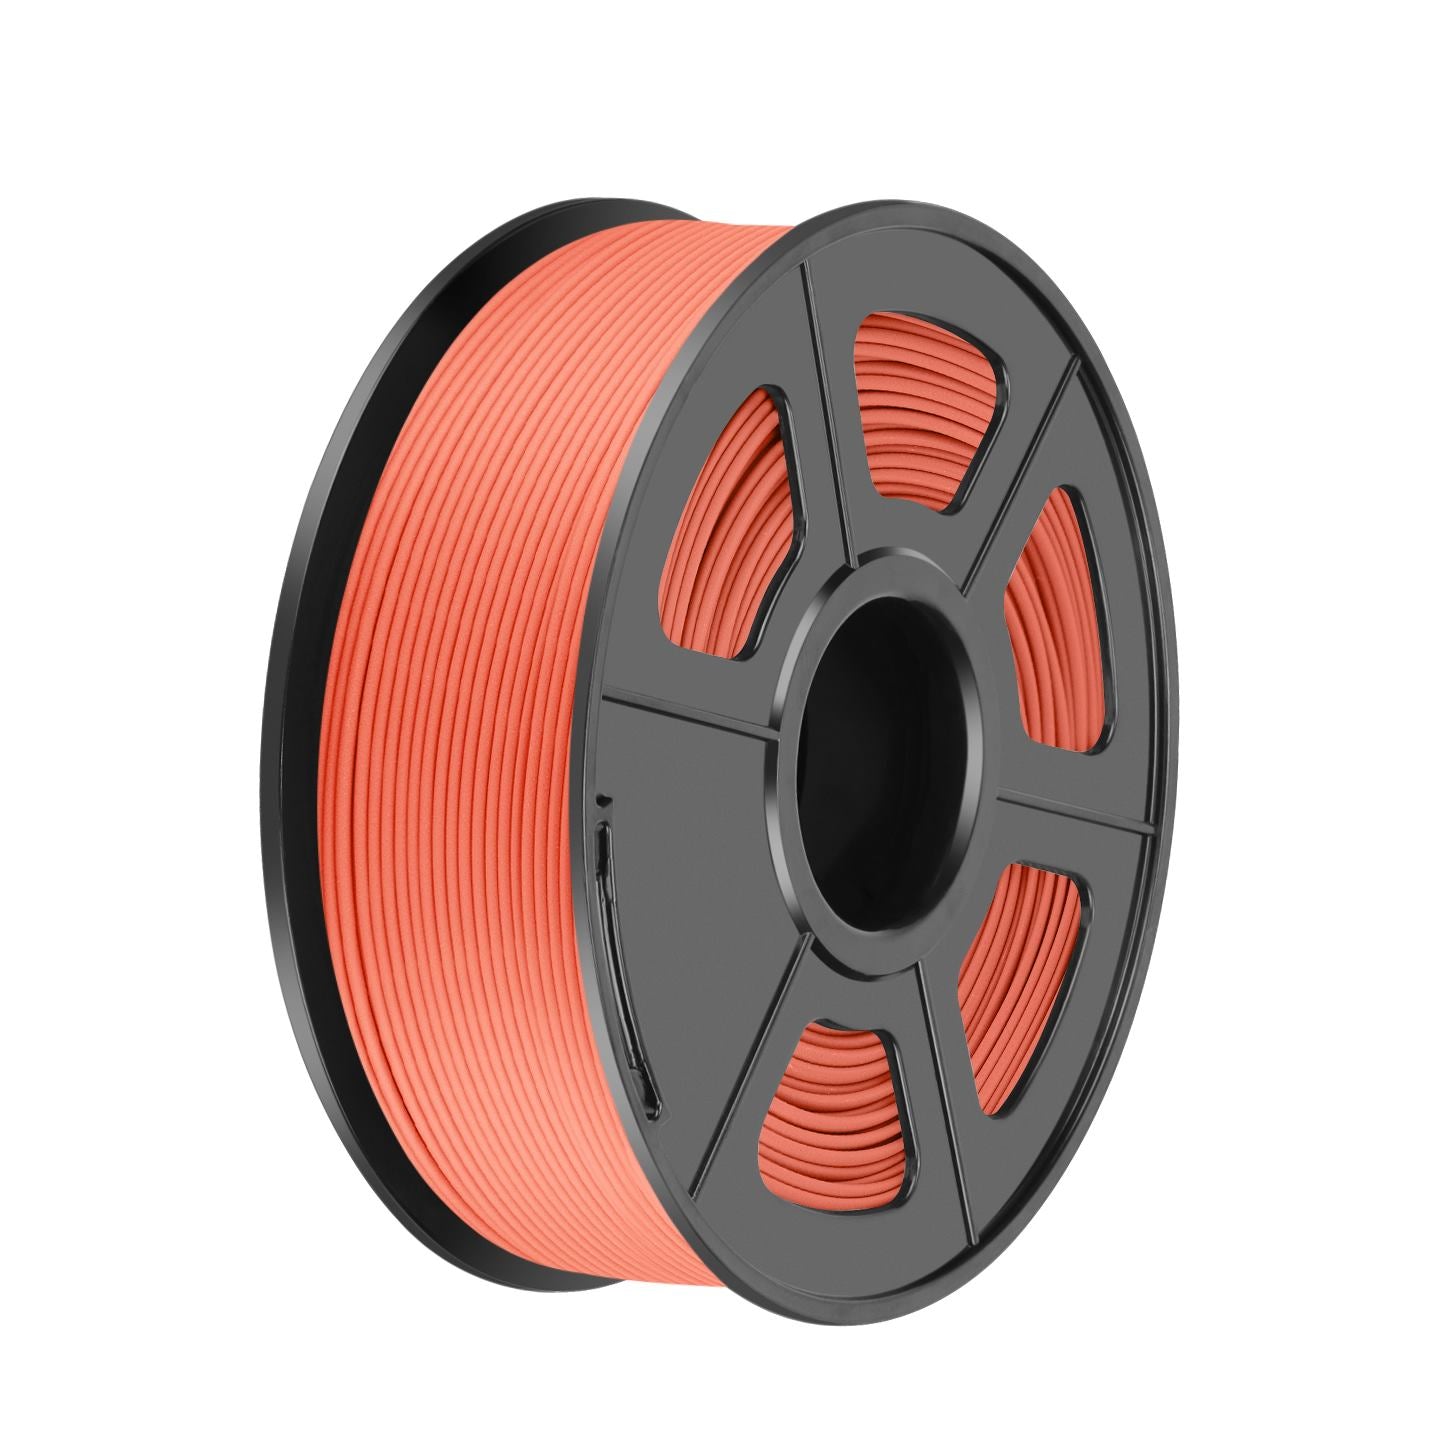 SUNLU 1.75mm High Speed PLA filament 3D Printer Filament 1KG/Roll